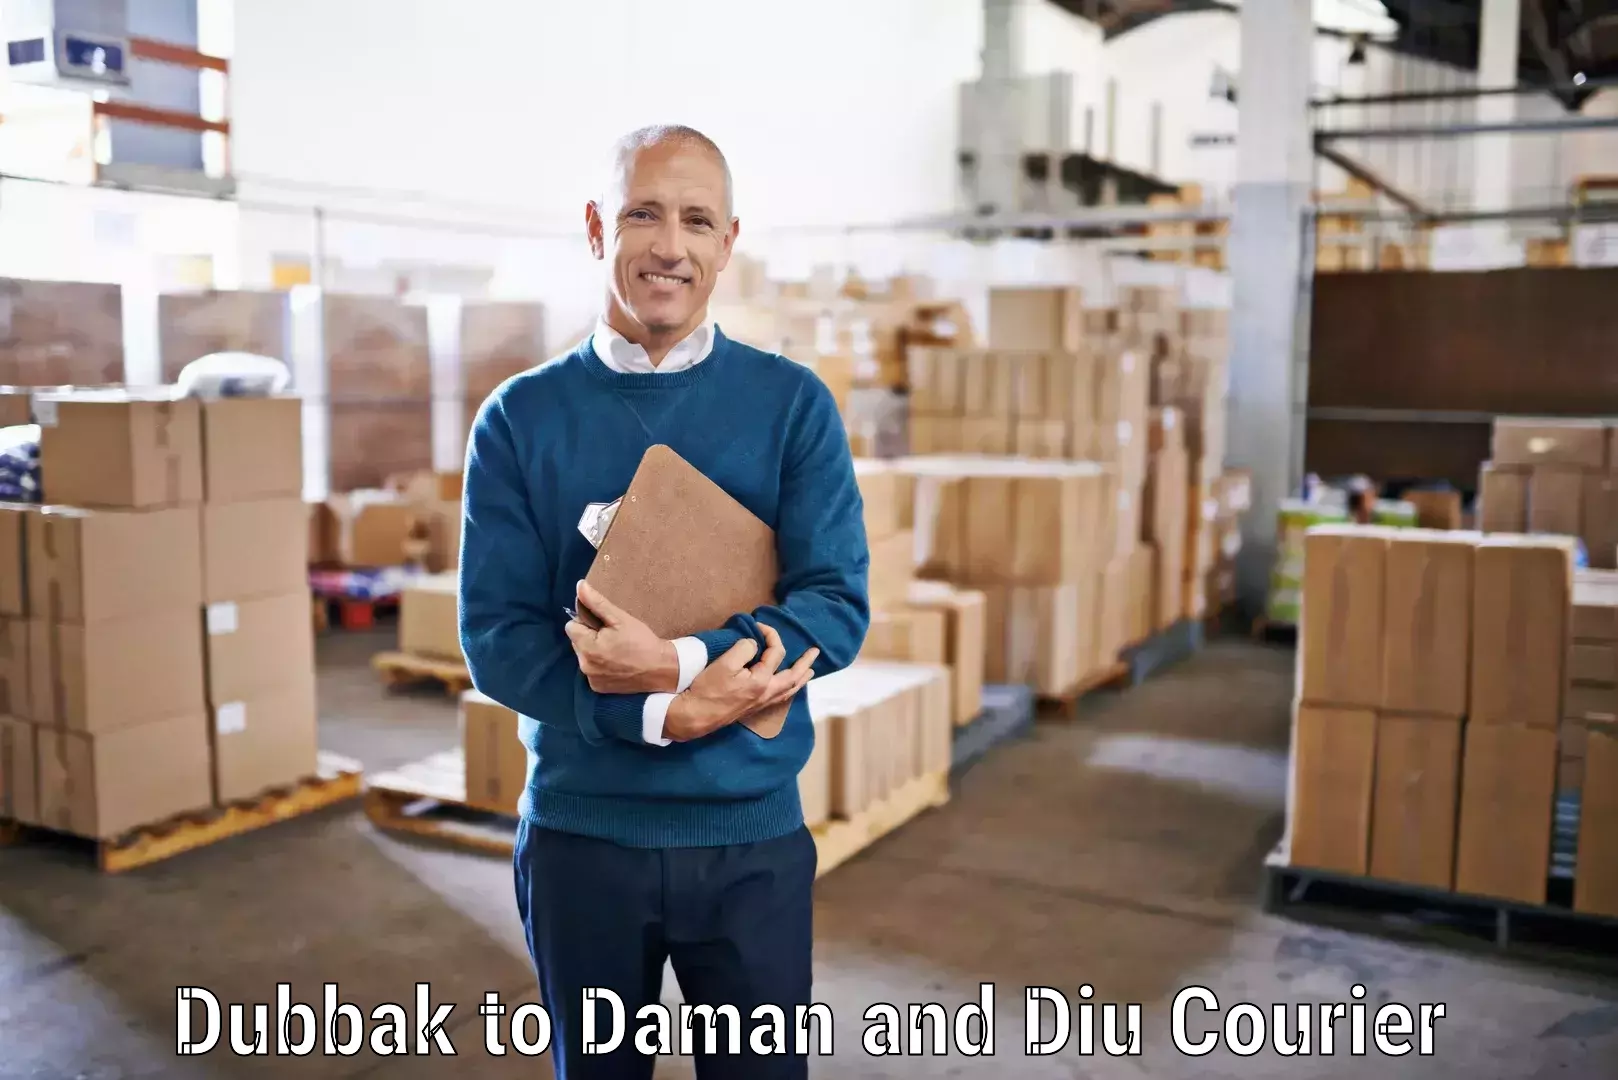 Nationwide delivery network Dubbak to Daman